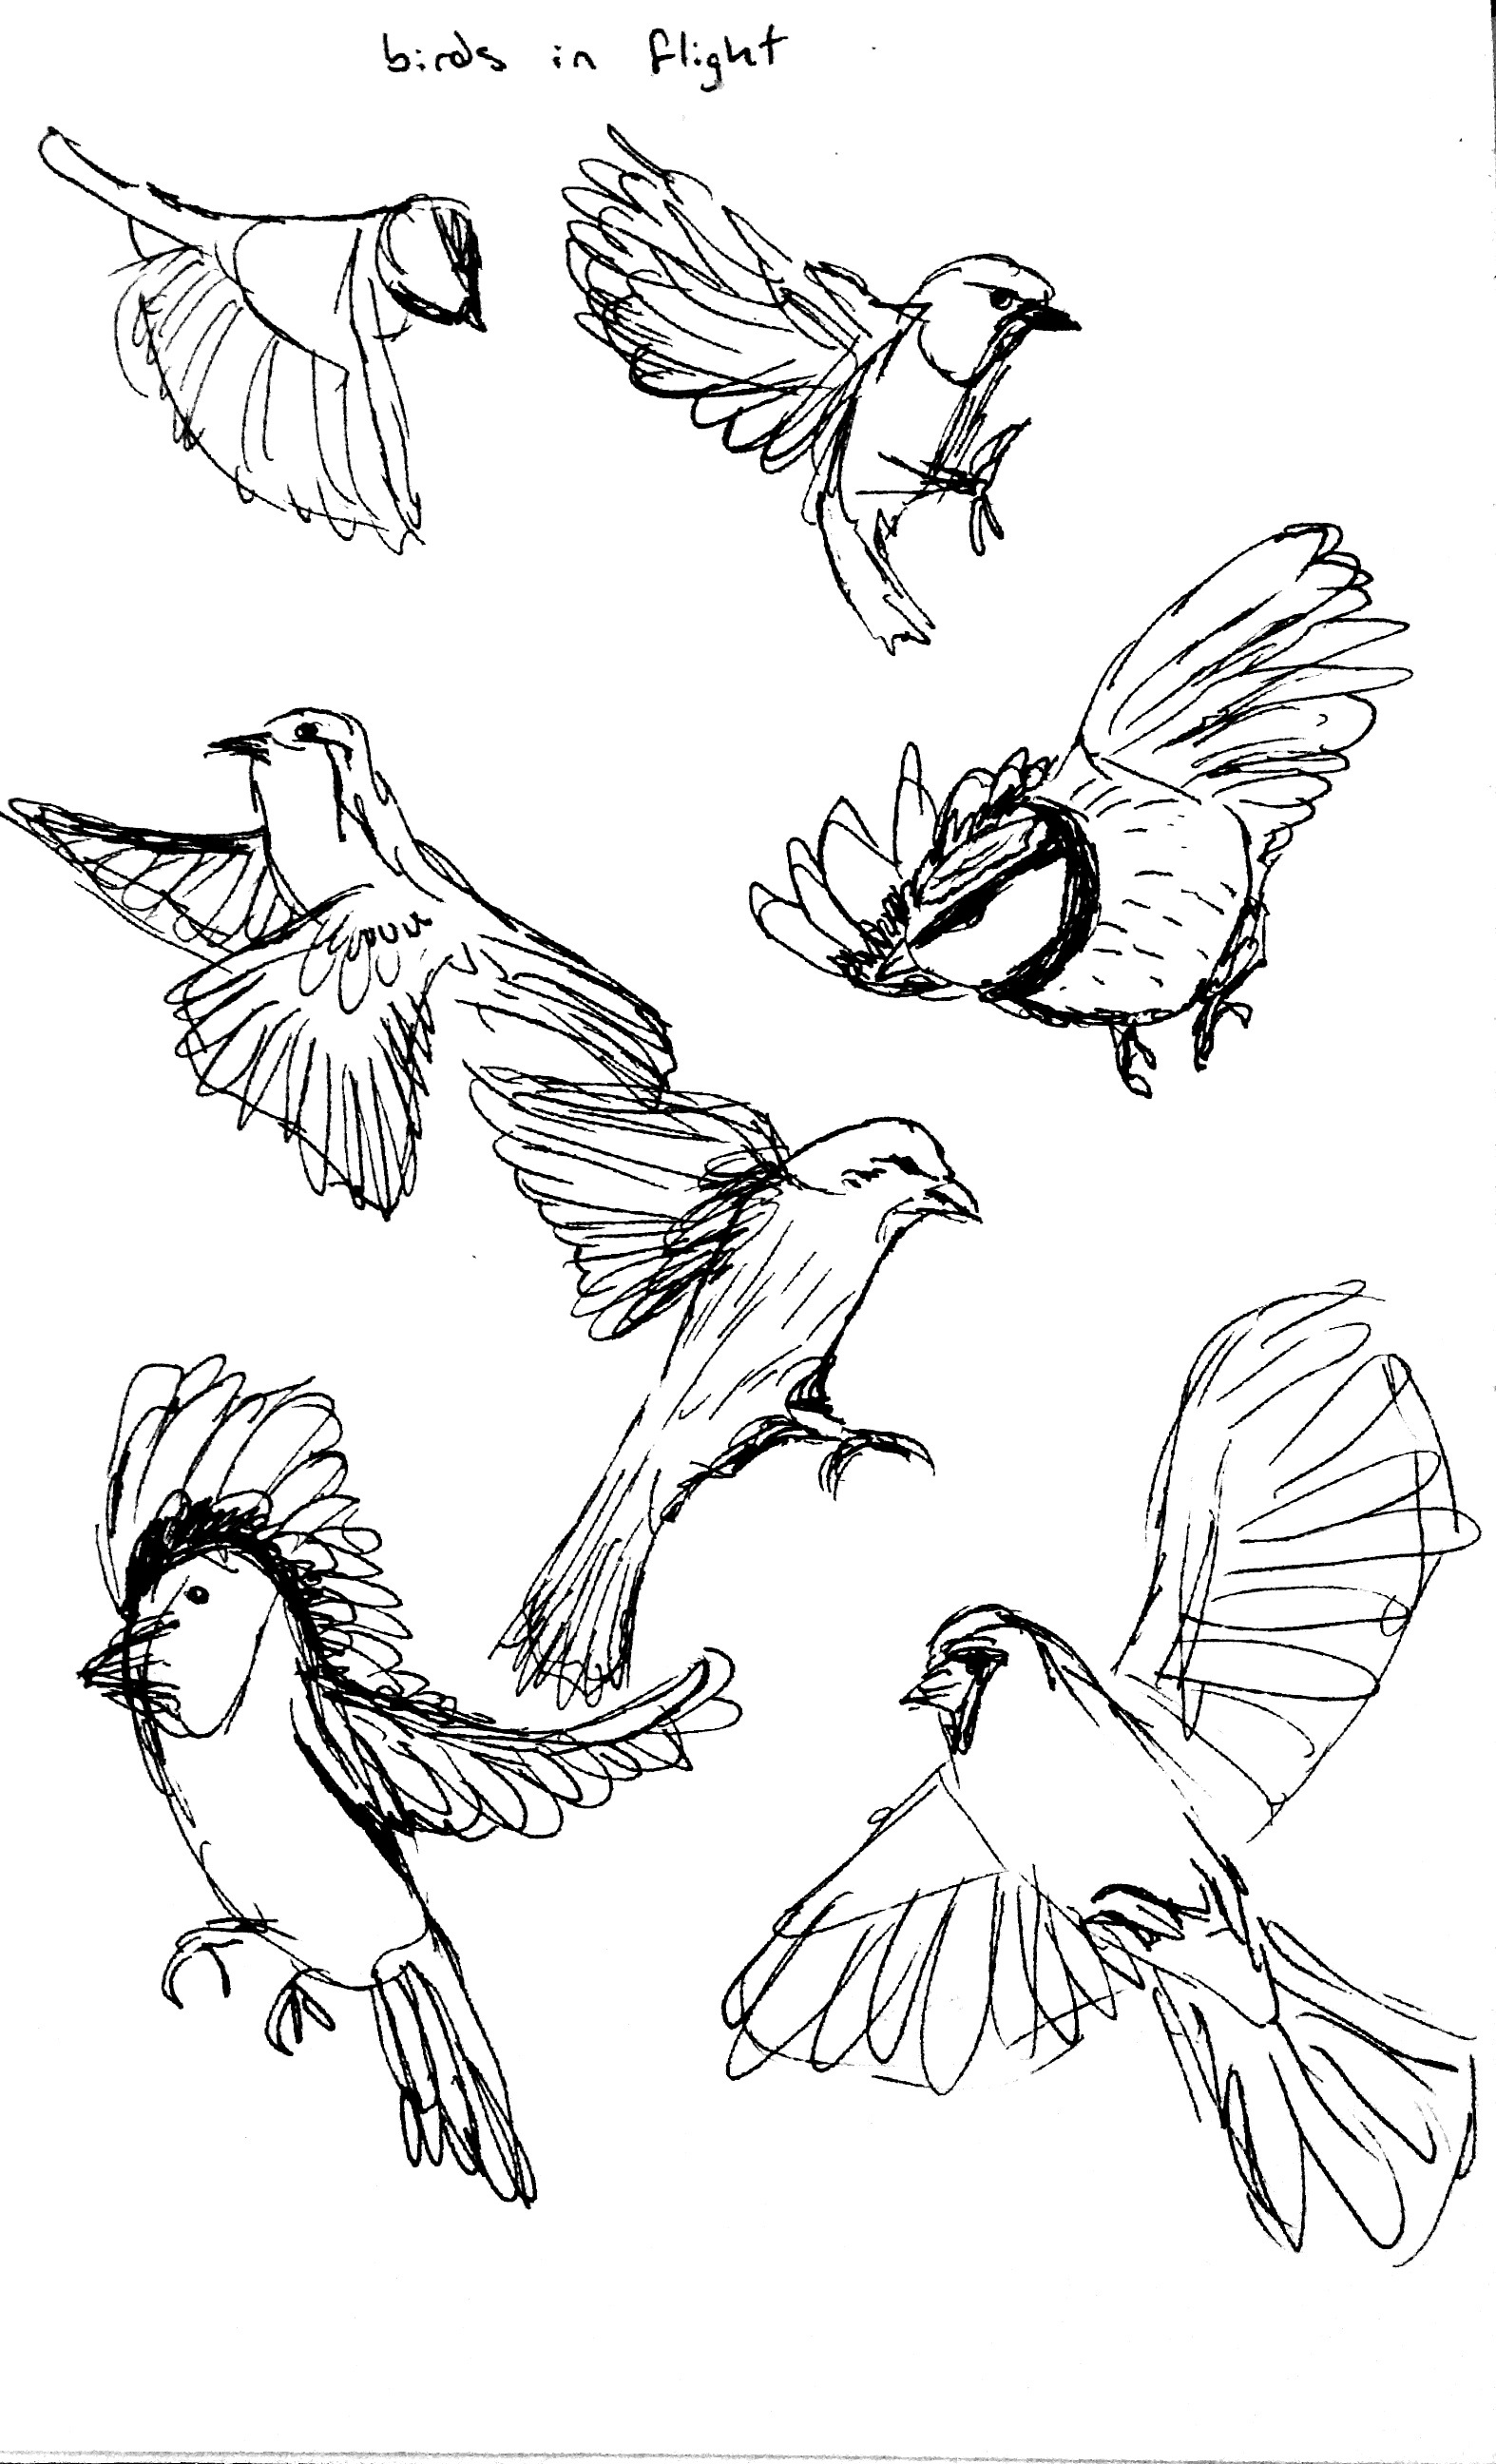 Зарисовки птиц в движении